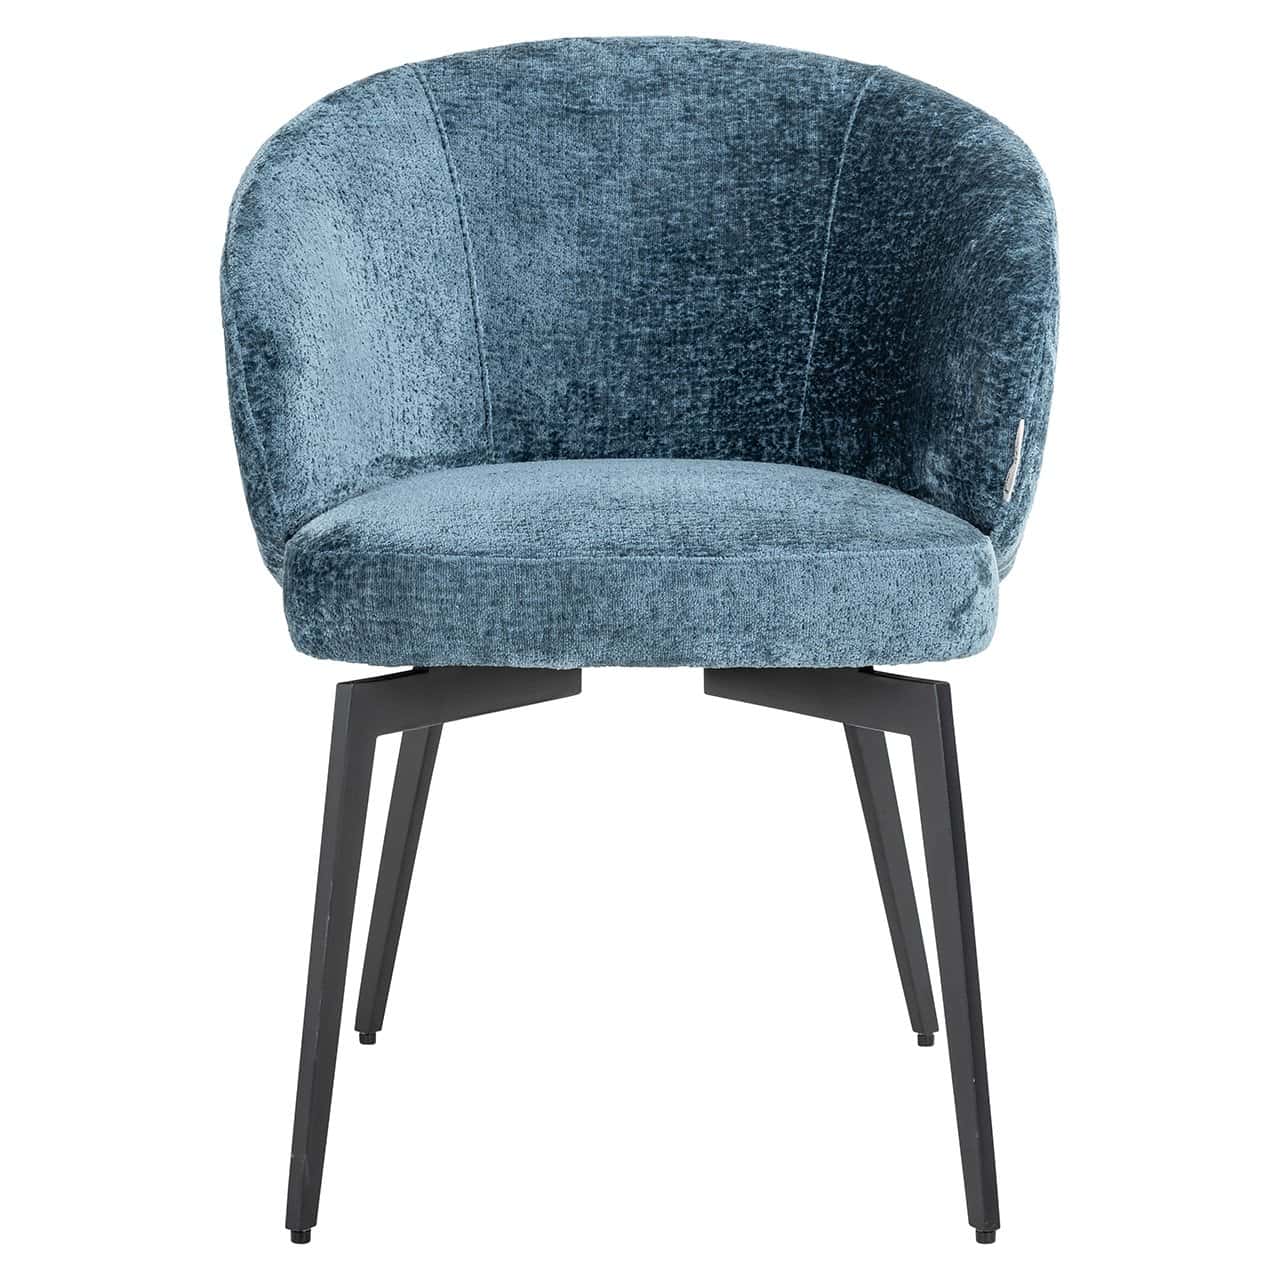 Chair Amphara blue chenille fire retardant